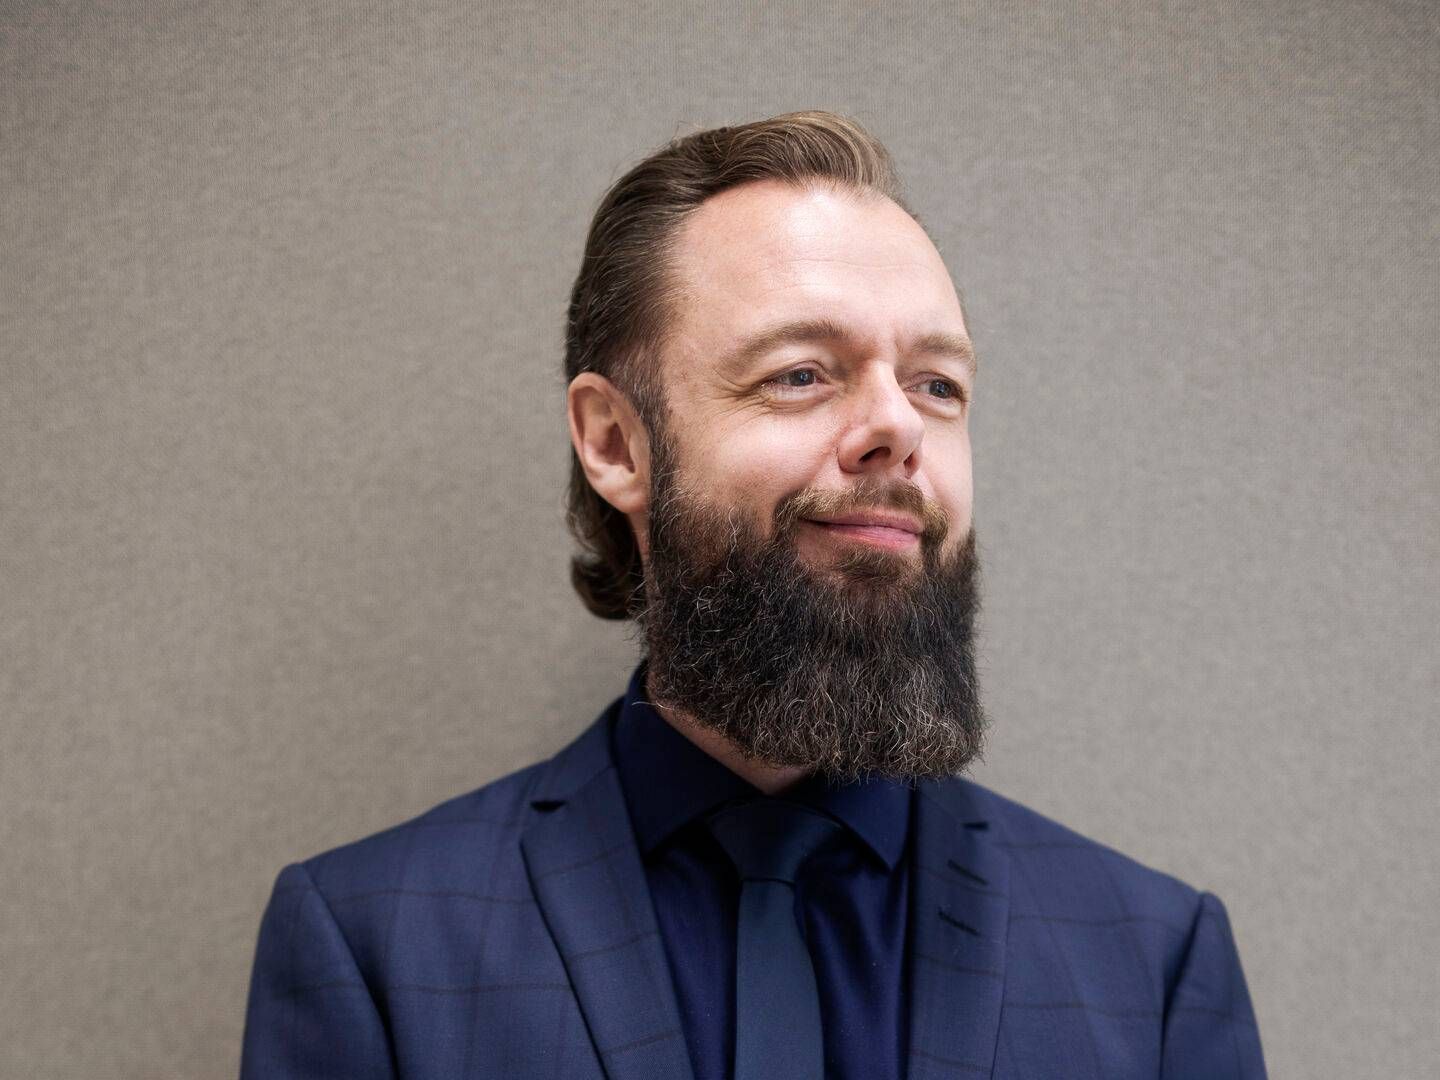 Kristian Brinch Hansen is proud of his full beard. | Photo: Casper Dalhoff/Ritzau Scanpix